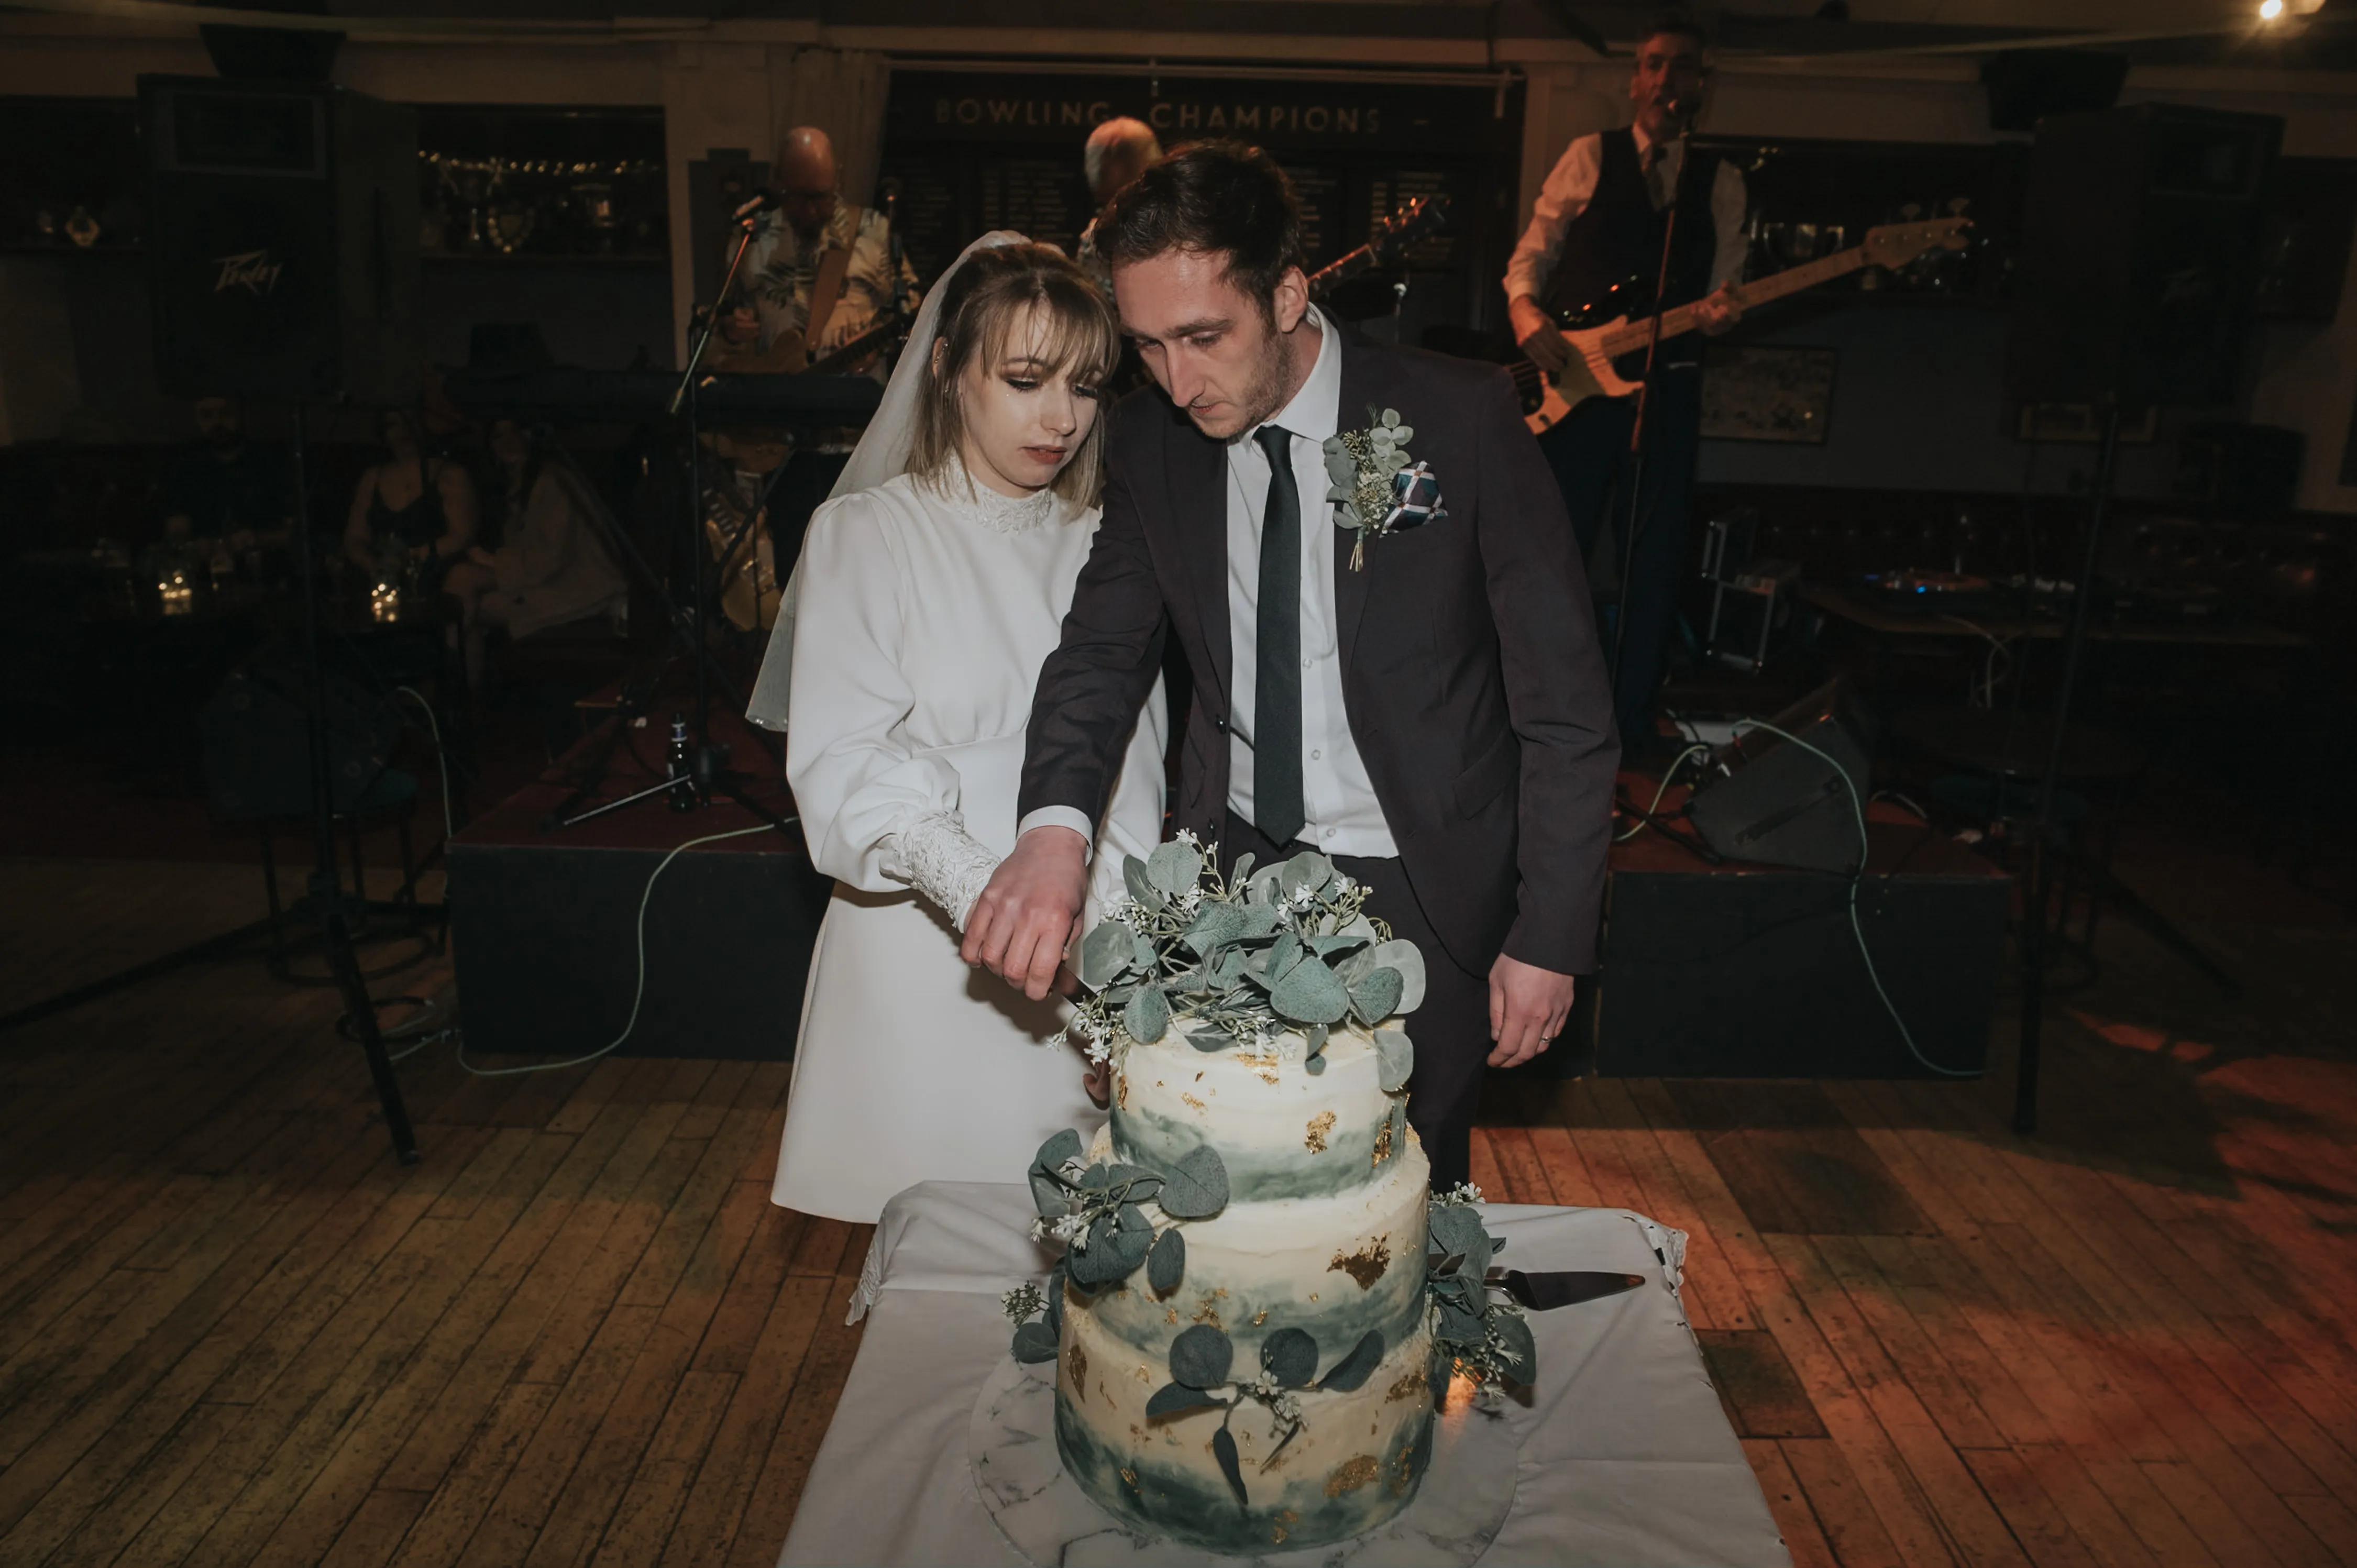 Cake cutting at a Queens Park Bowling Club Wedding